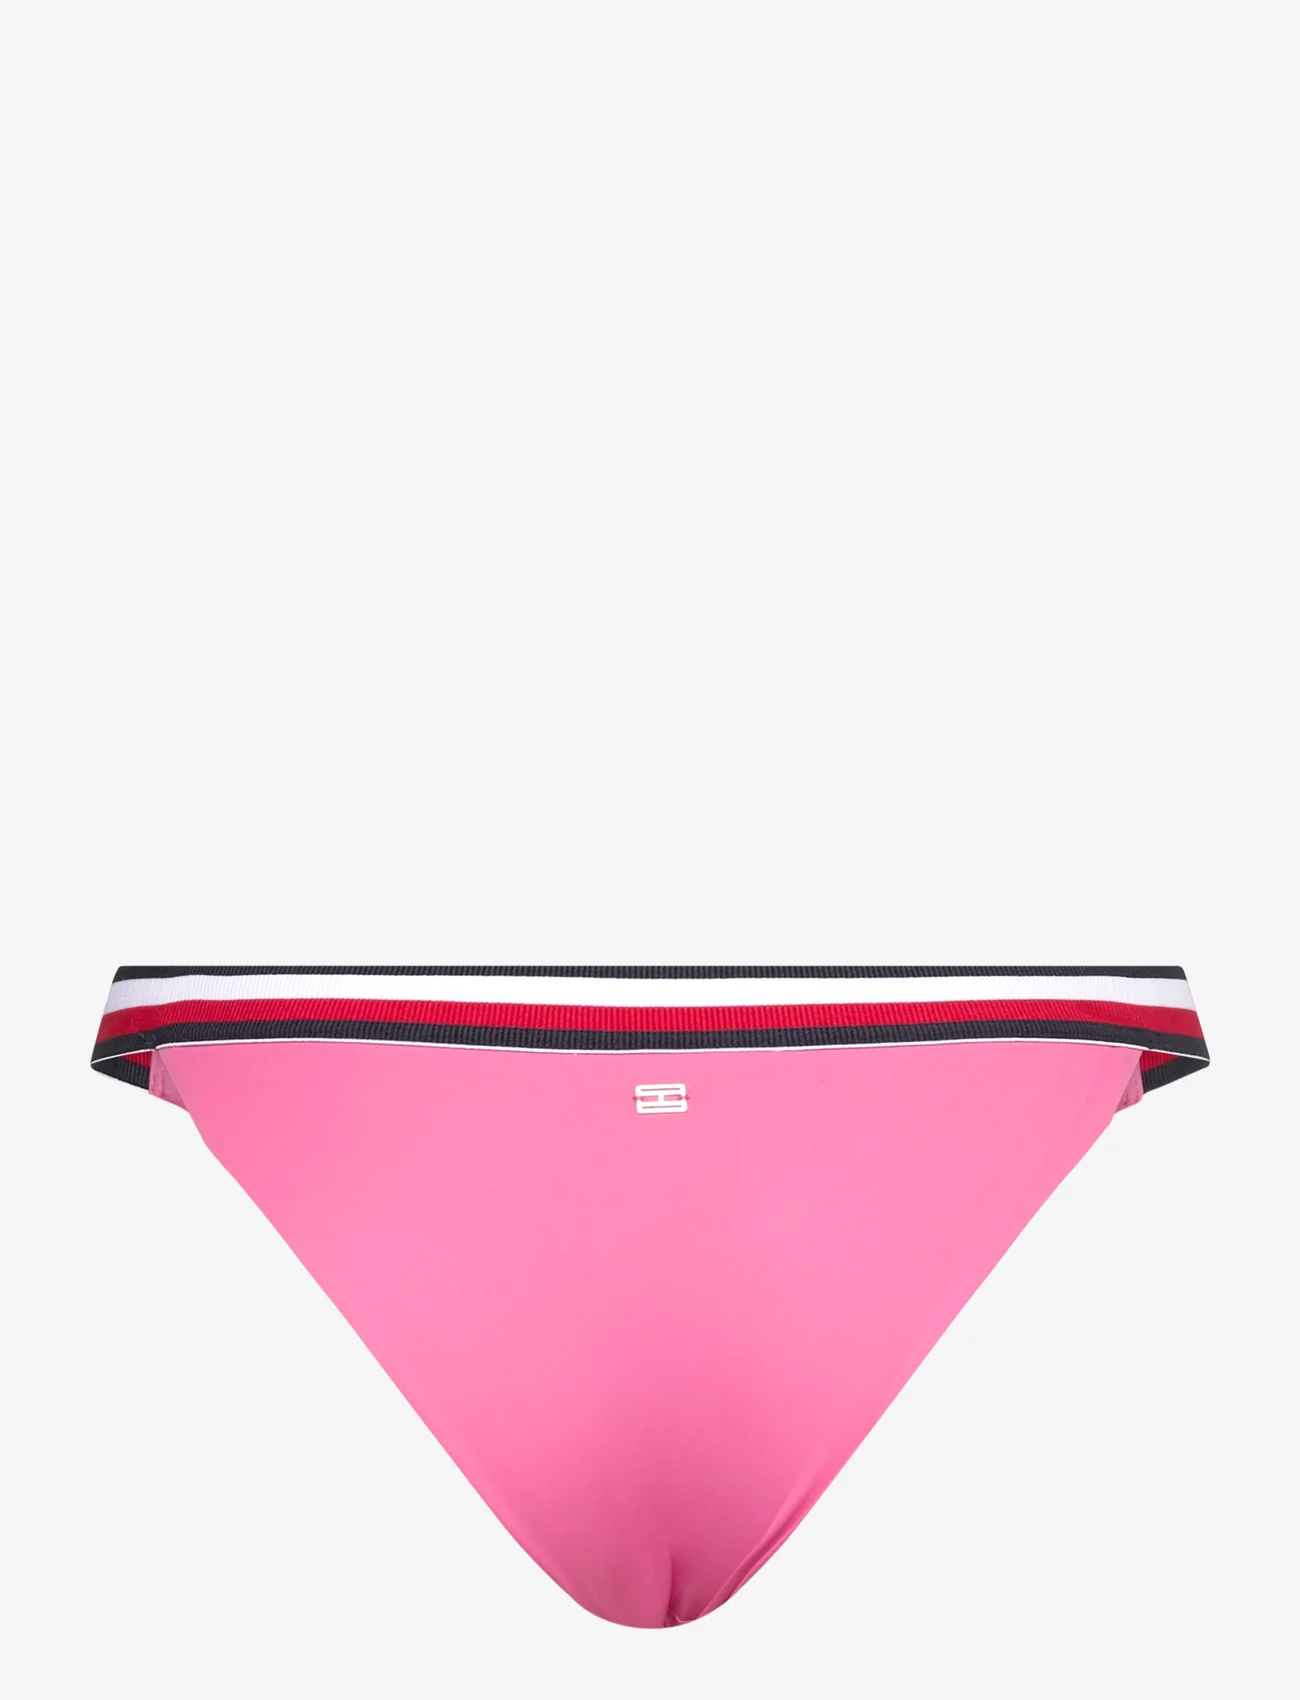 Tommy Hilfiger - CHEEKY BIKINI - bikinihousut - radiant pink - 1